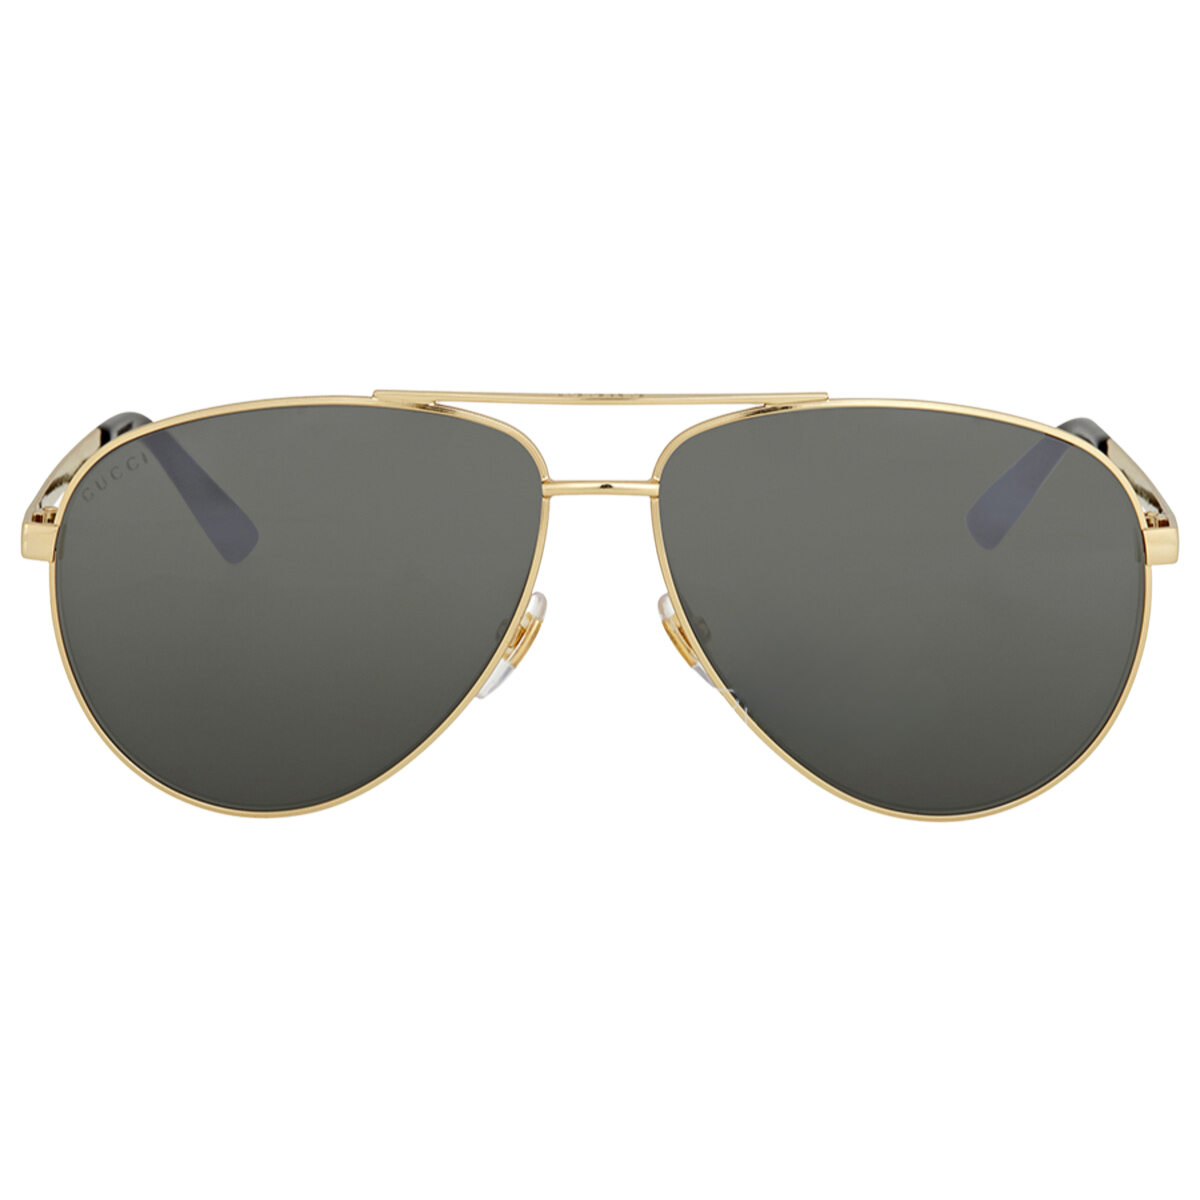 "Gucci 0137S Sunglasses: Optorium's Men's Collection"